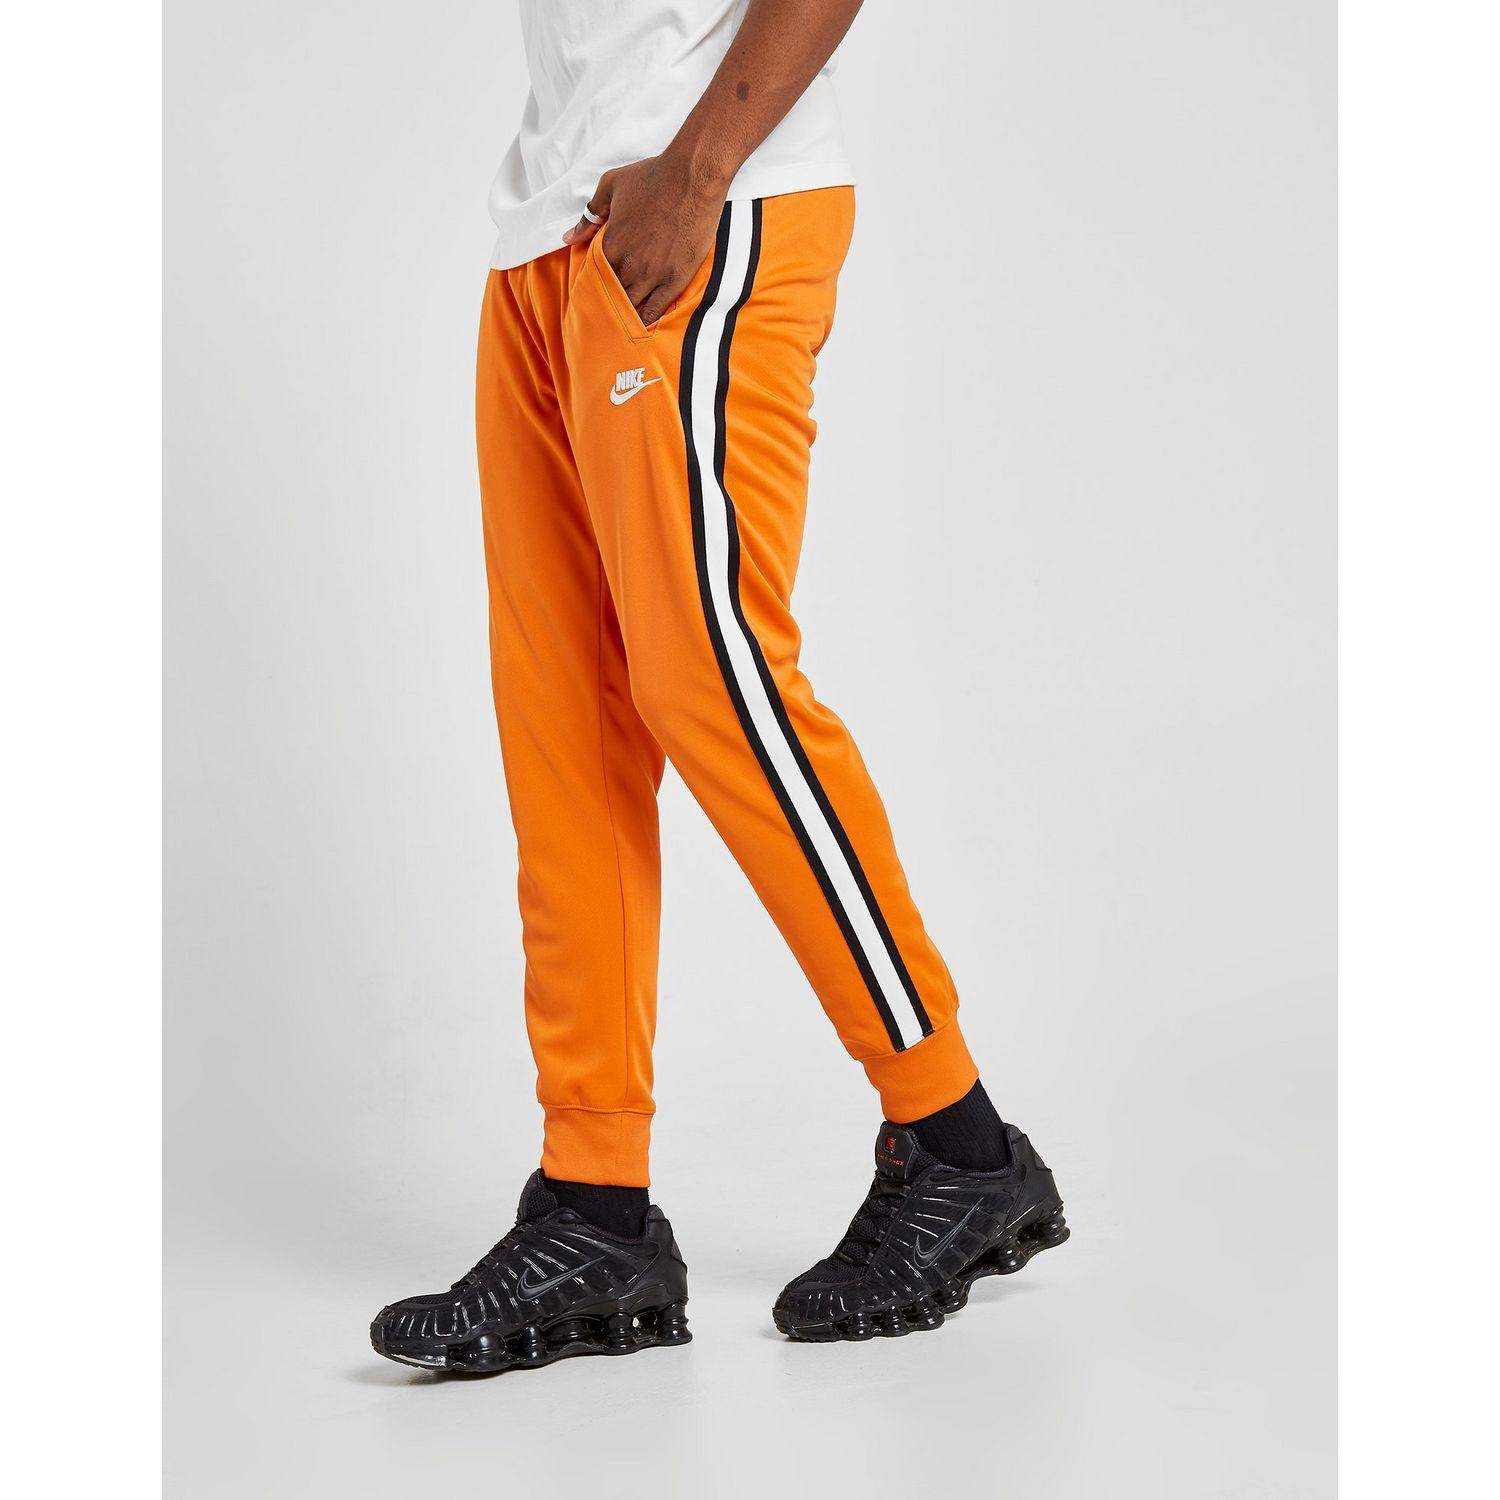 nike track pants orange